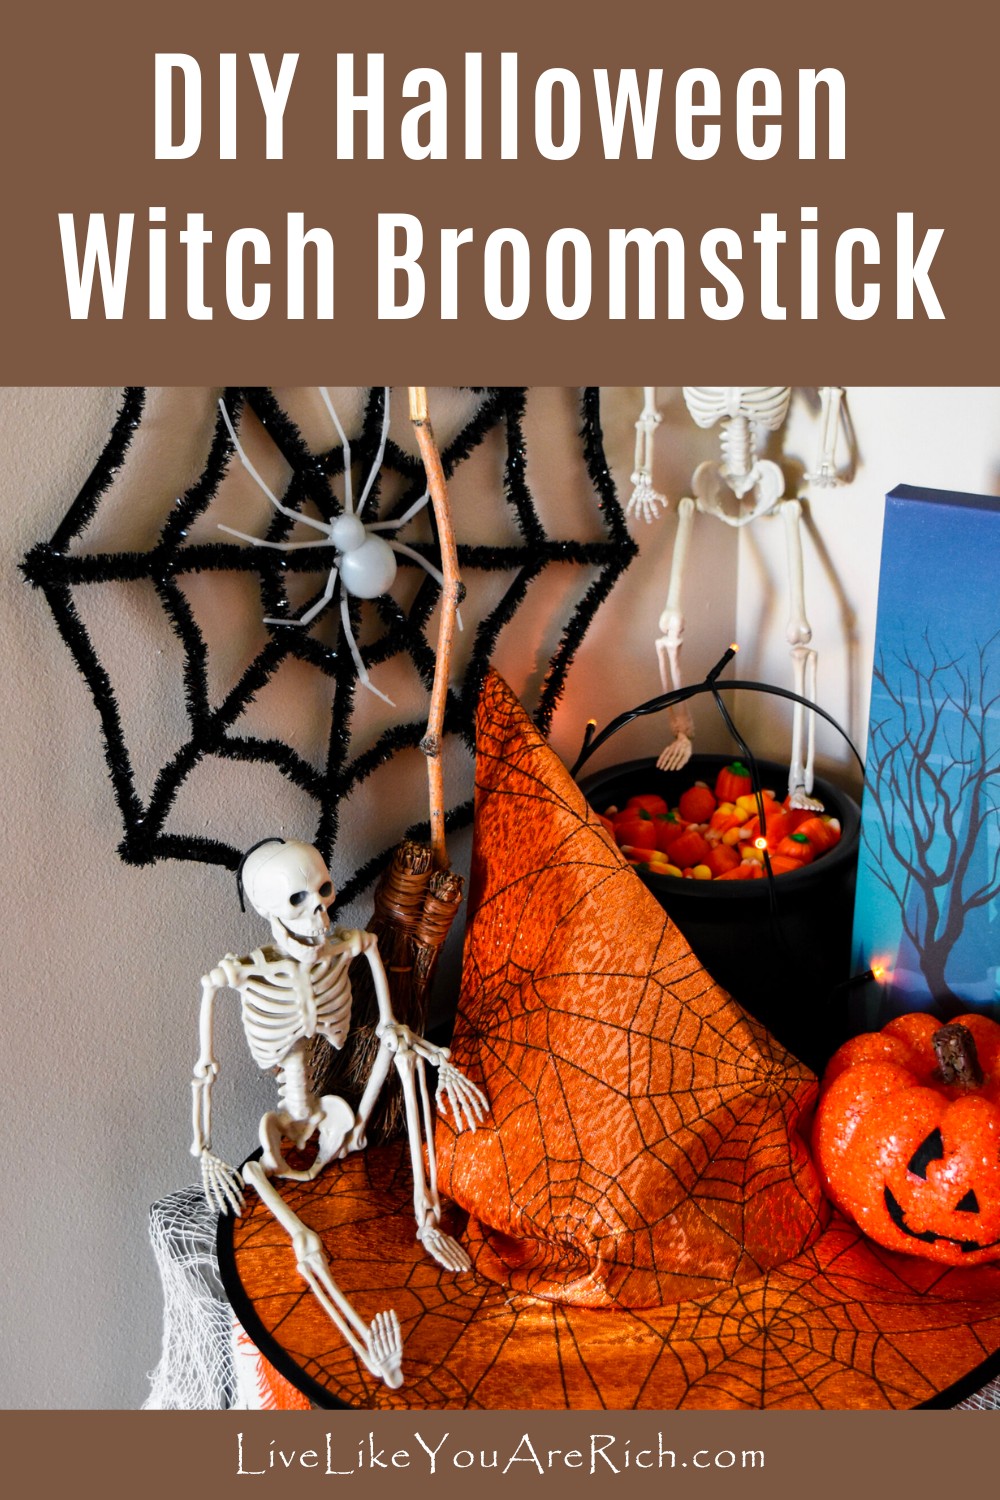 DIY Halloween Witch Broomstick